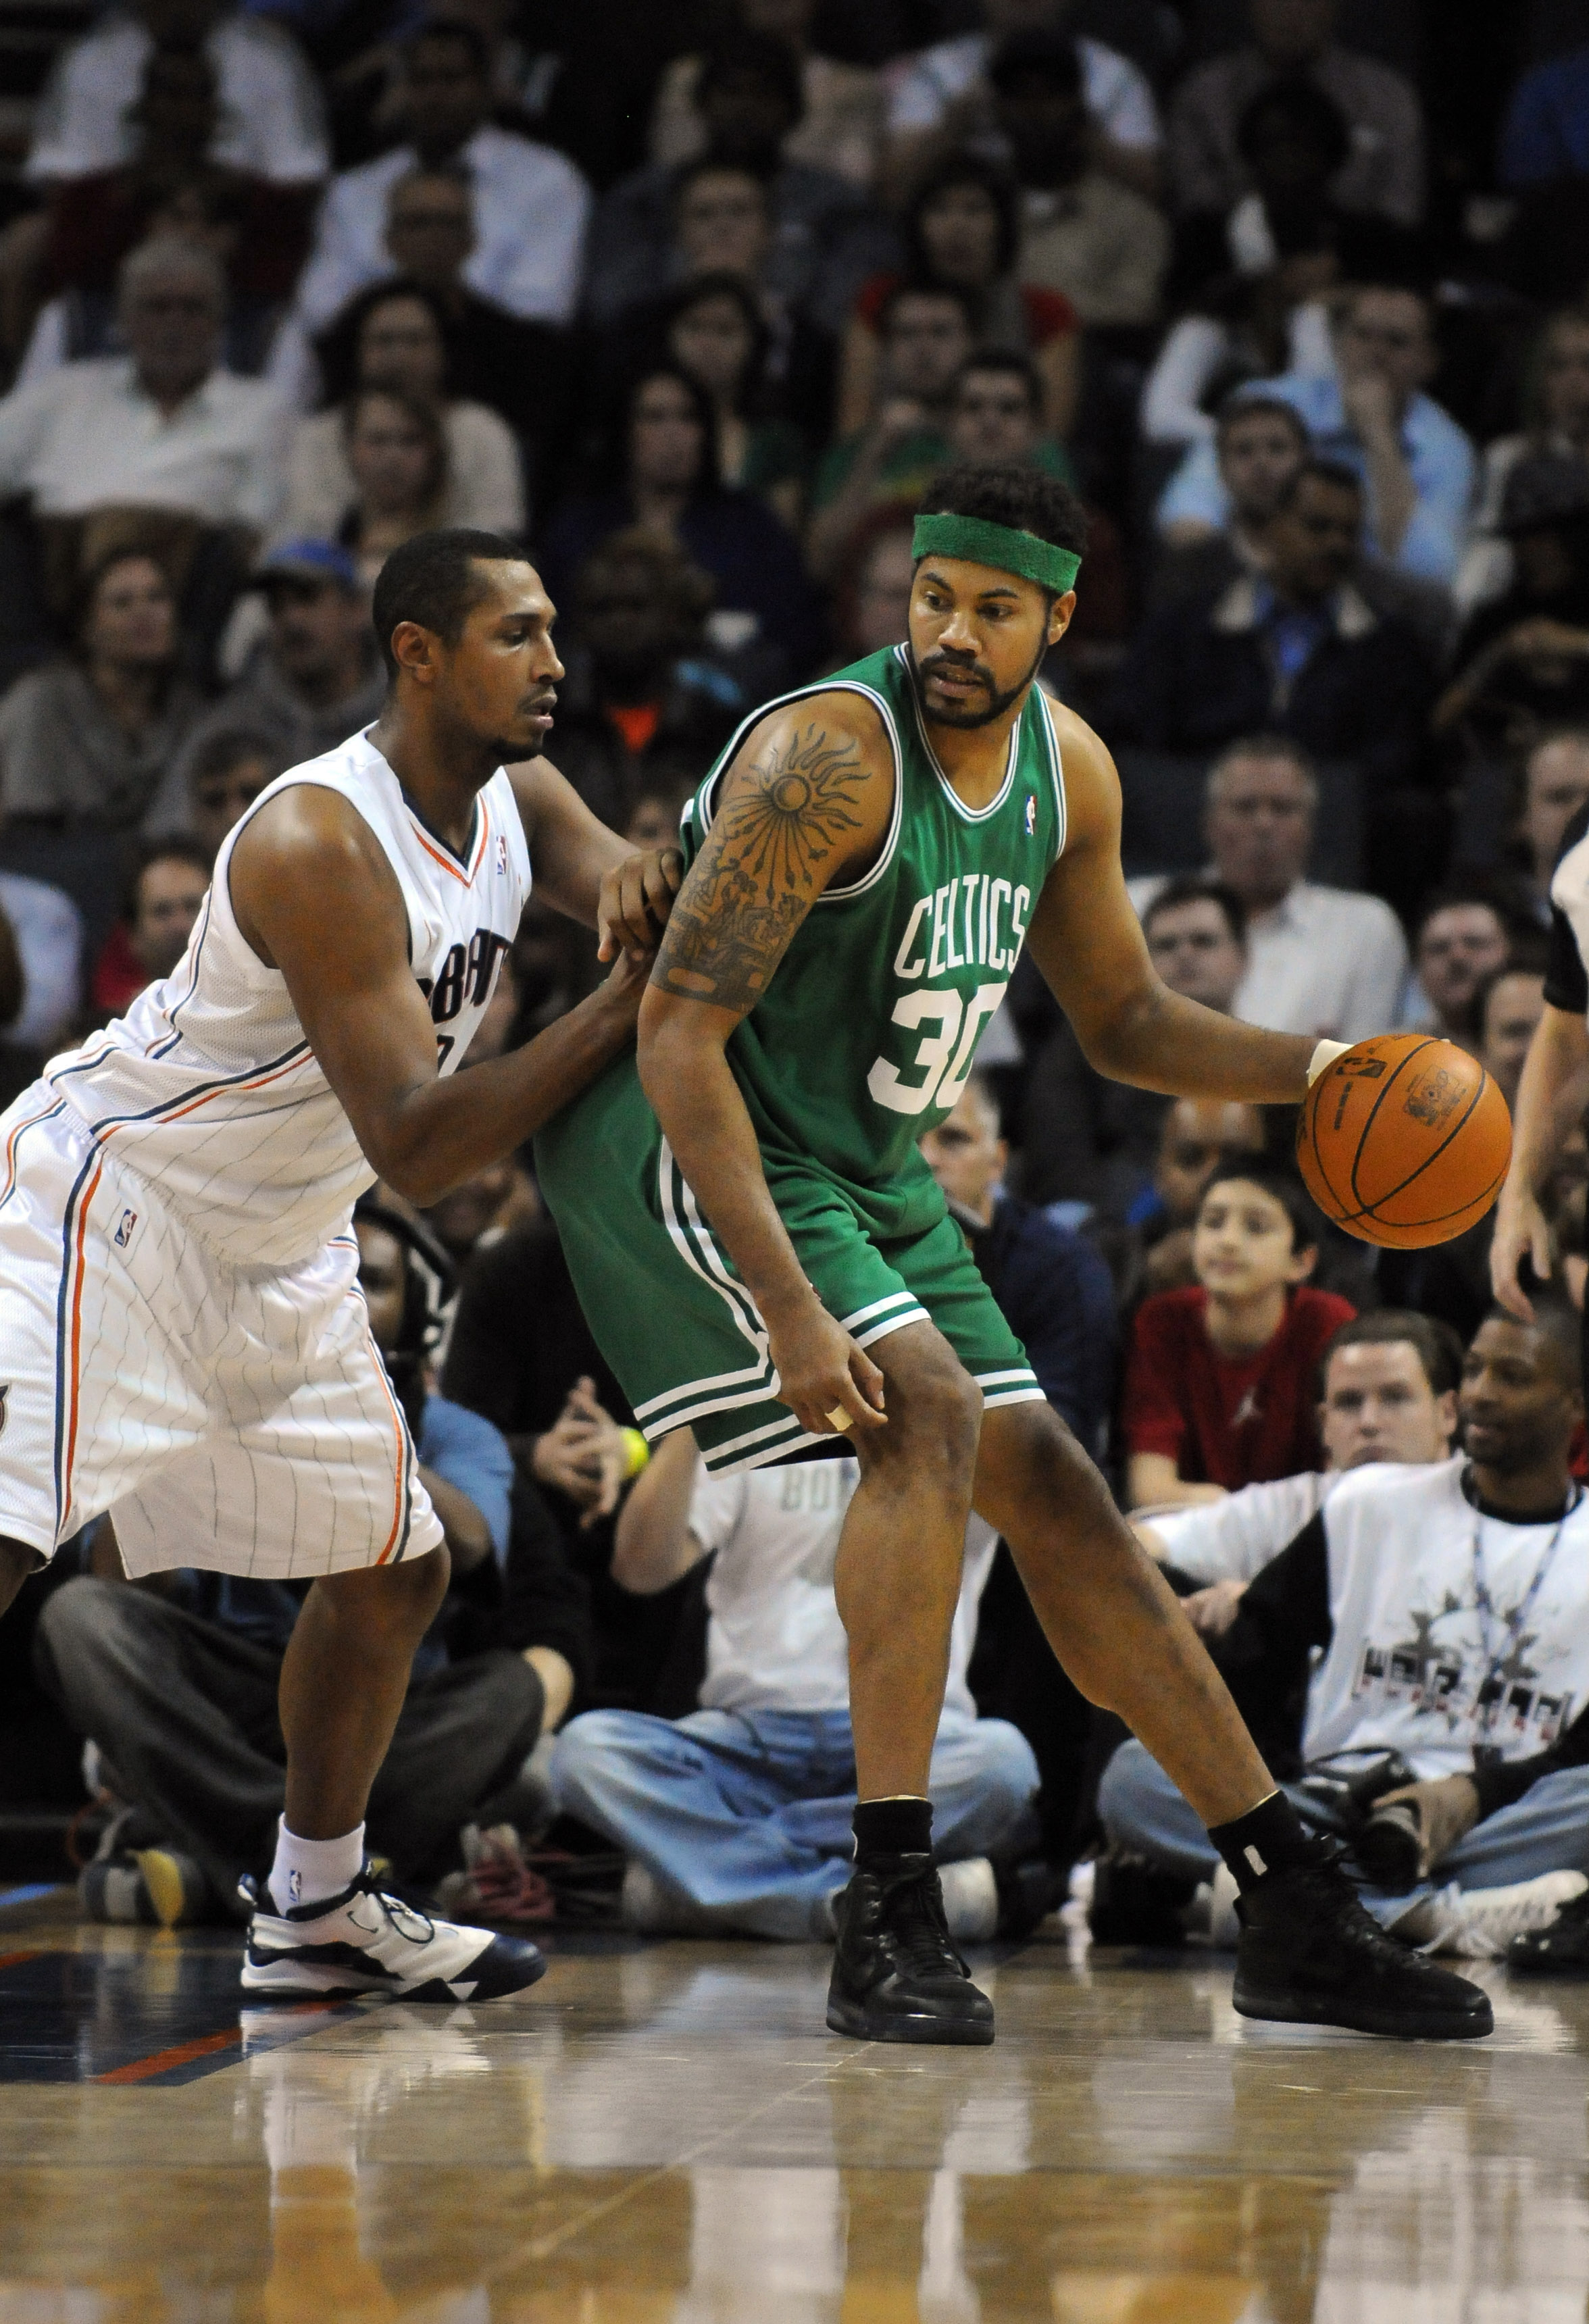 Justifying the Signing of Rasheed Wallace - CelticsBlog